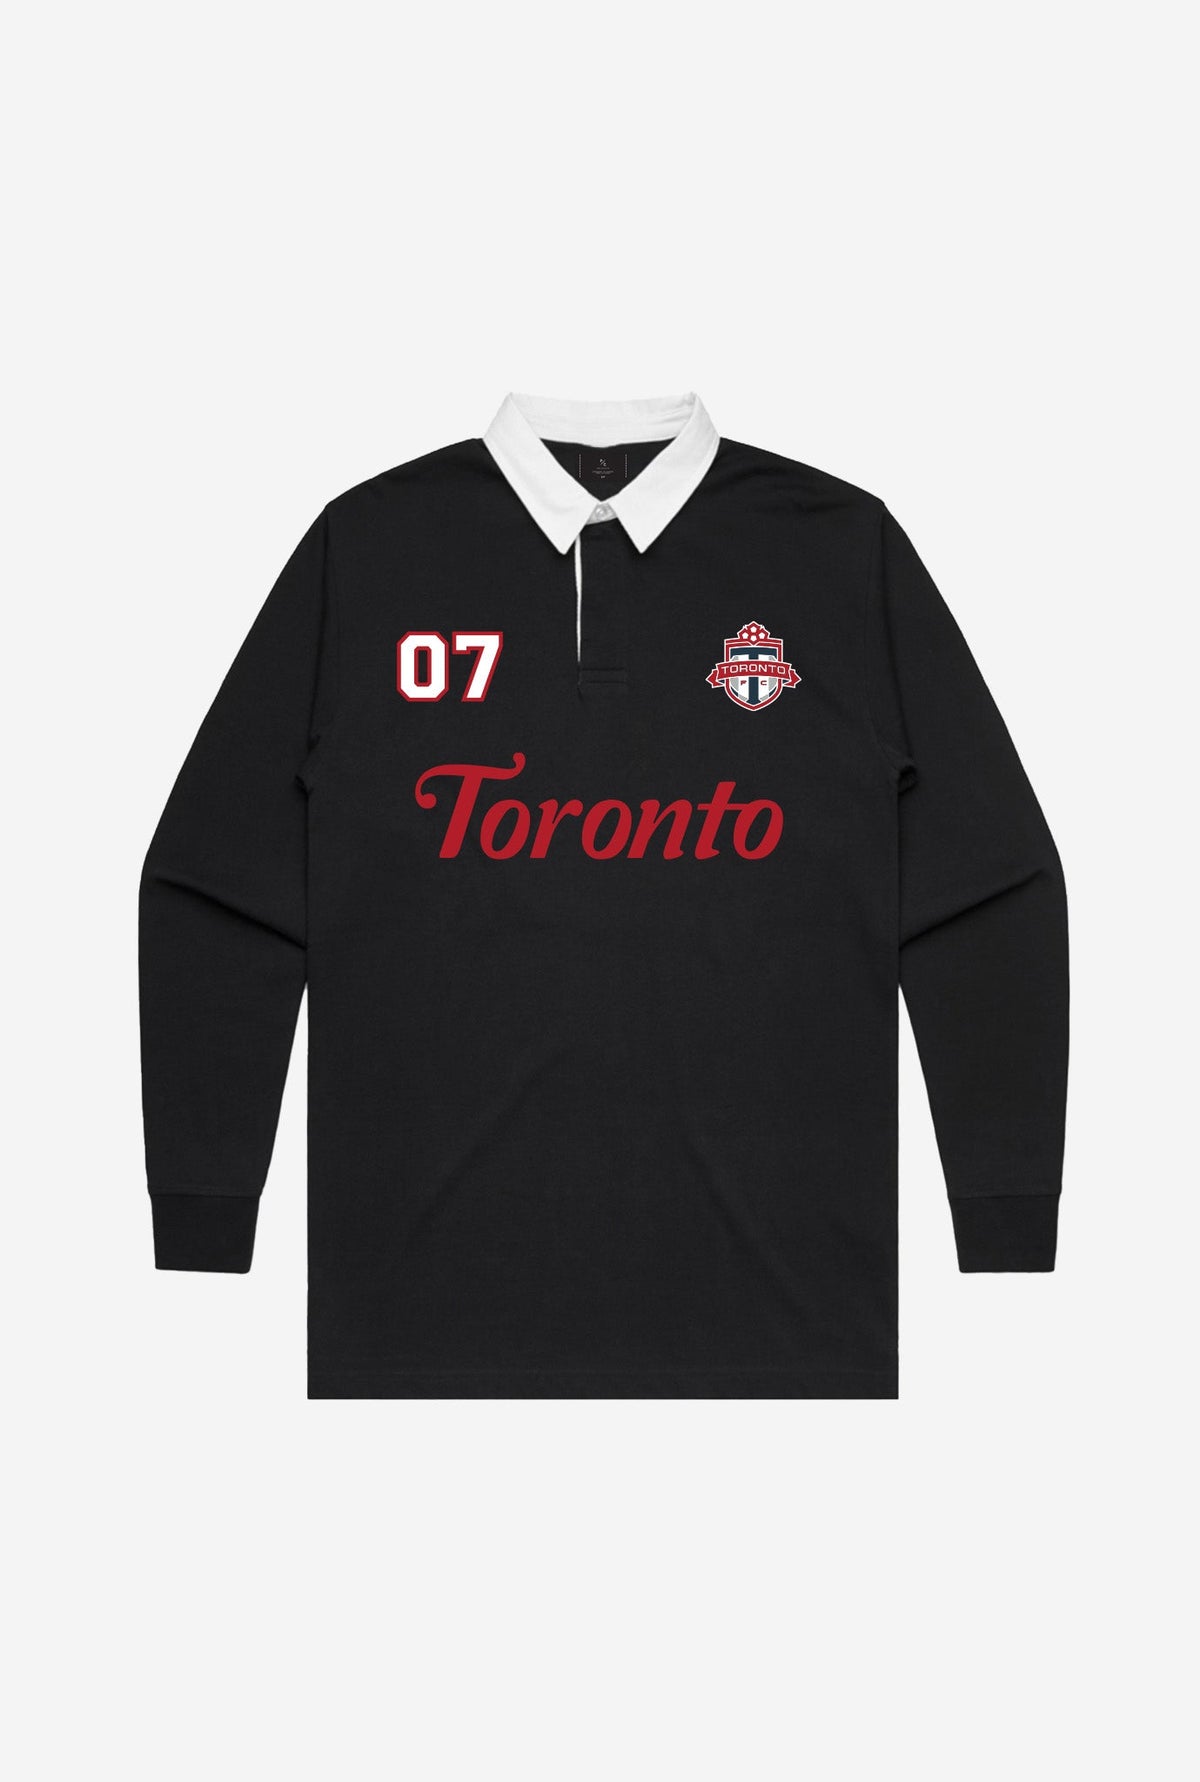 Toronto FC Emblem Rugby - Black